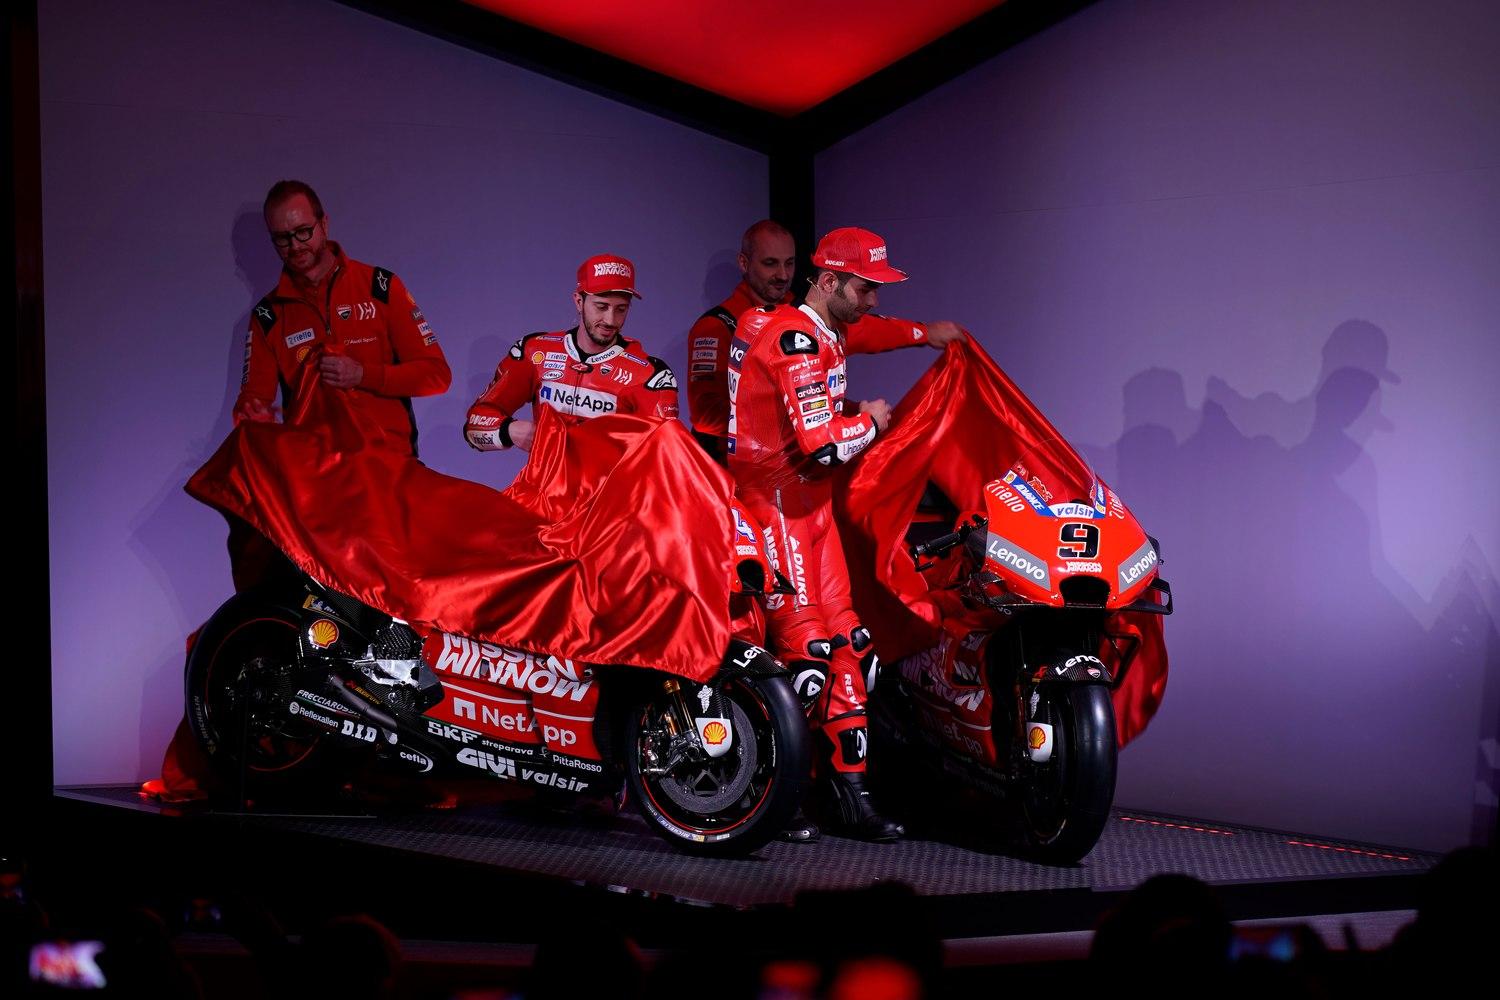 The 2019 Mission Winnow Ducati team presented at Neuchâtel